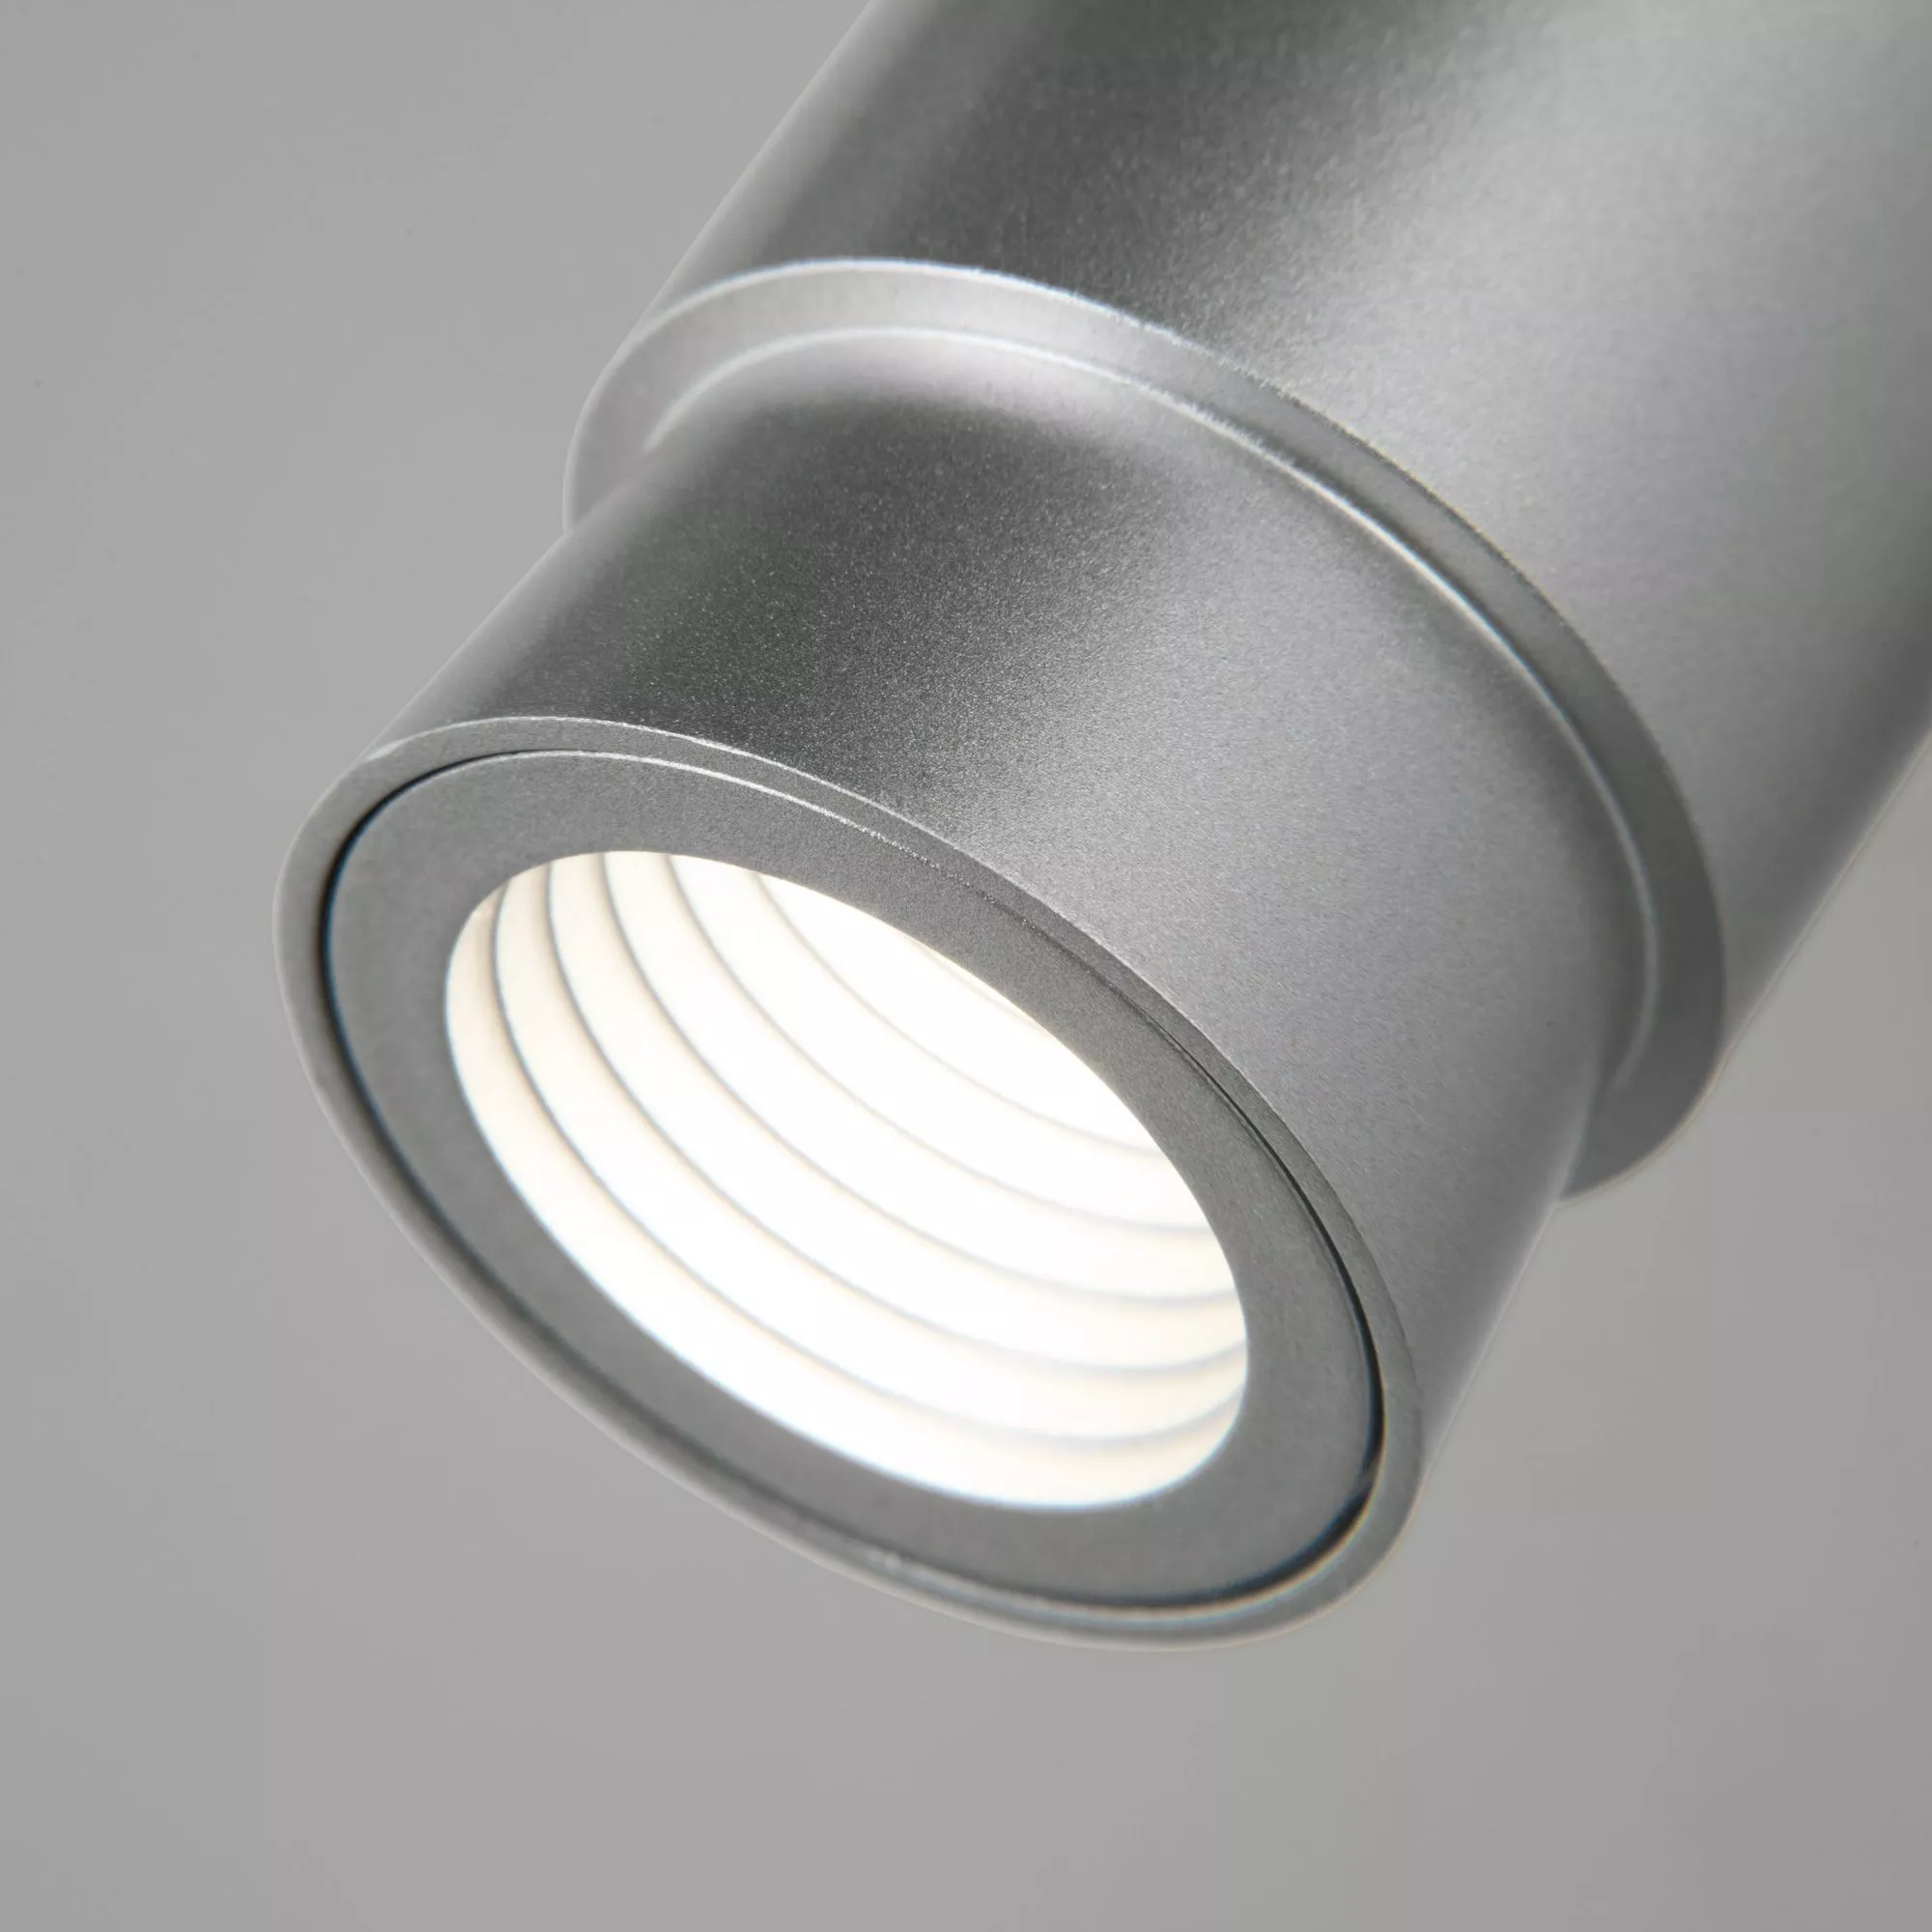 Бра Eurosvet Plat 20125/1 LED серебро